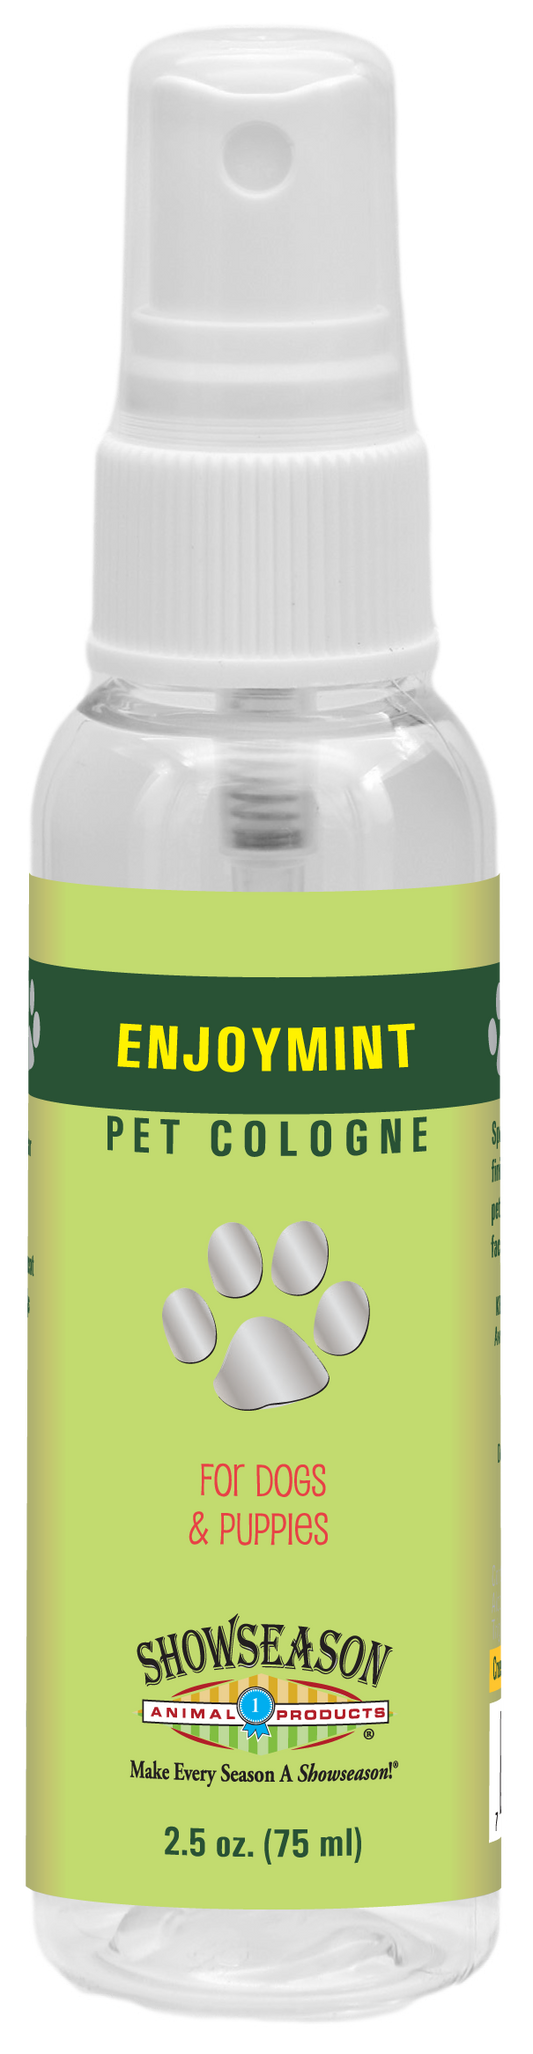 Enjoymint Pet Cologne | Showseason®